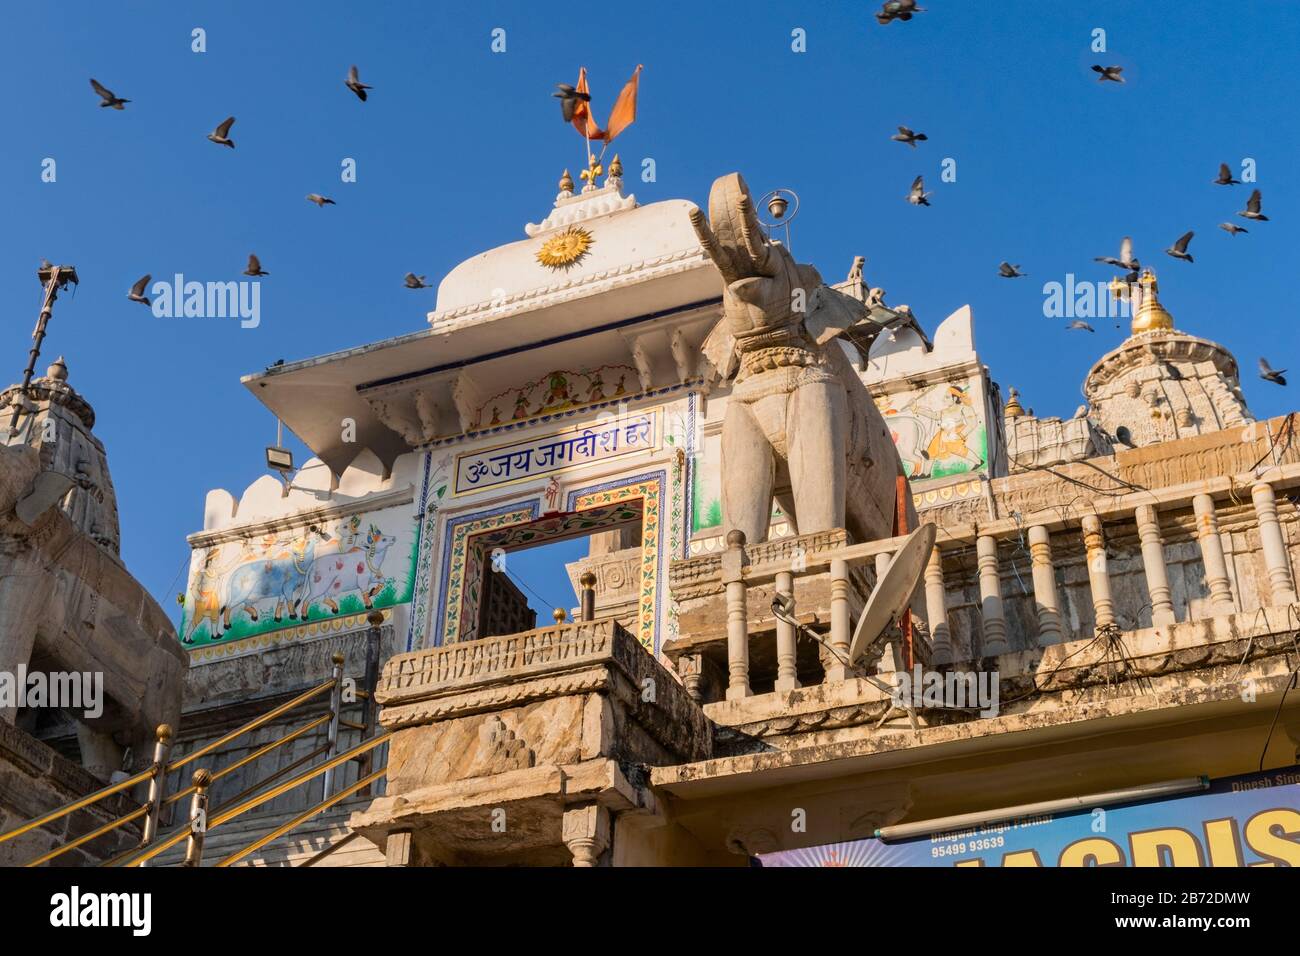 Jagdish temple Udaipur Rajasthan India Stock Photo